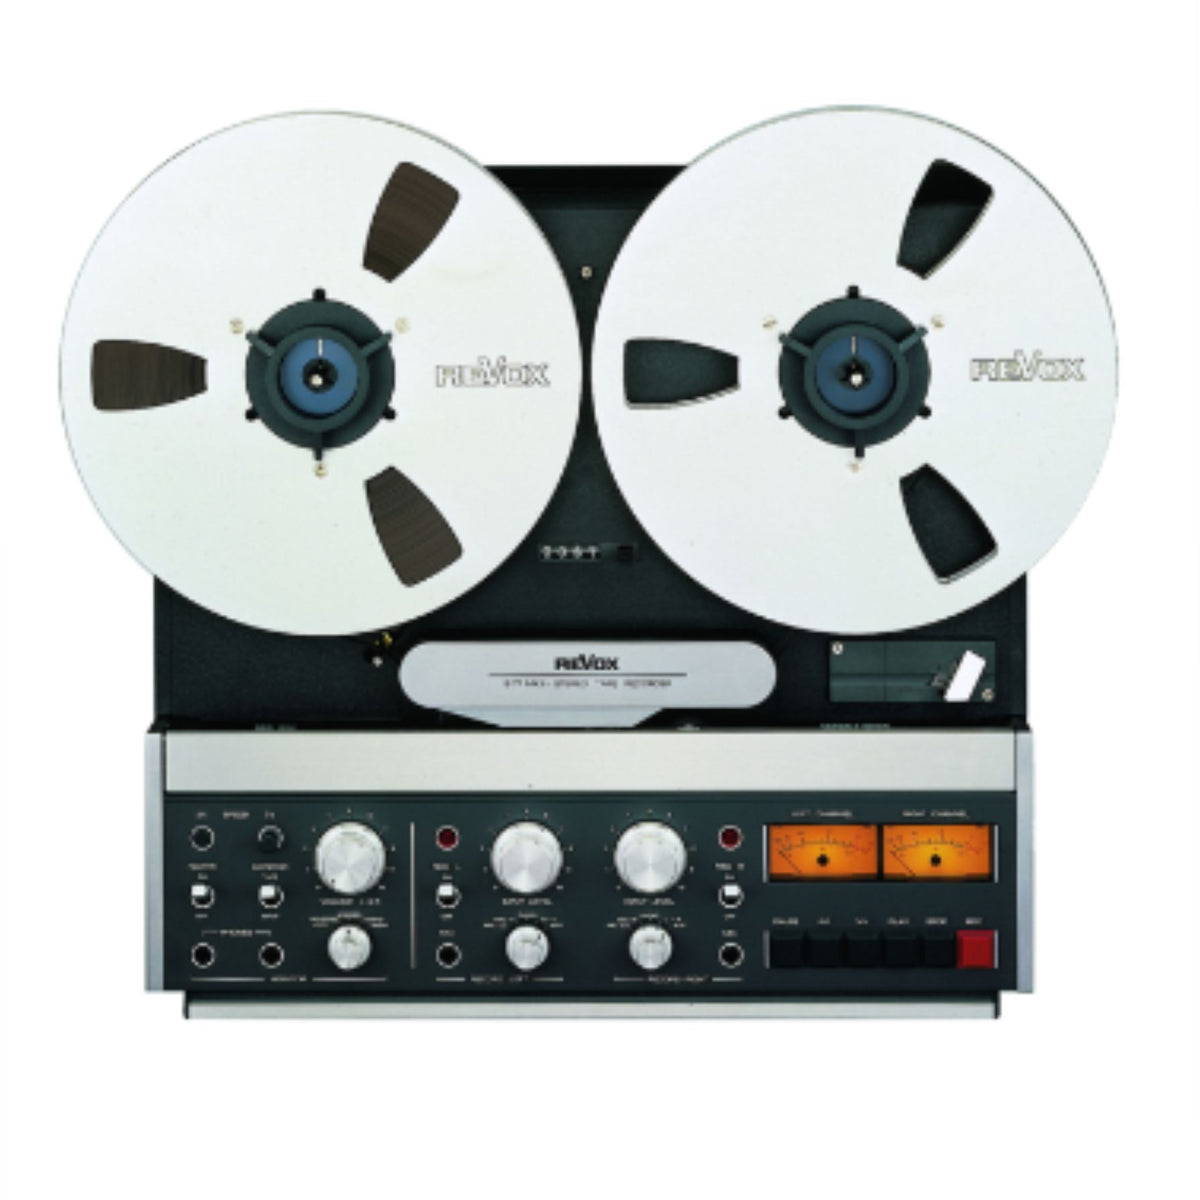 Revox B77 MKII high speed tape recorder, 1984. Introduced 1977